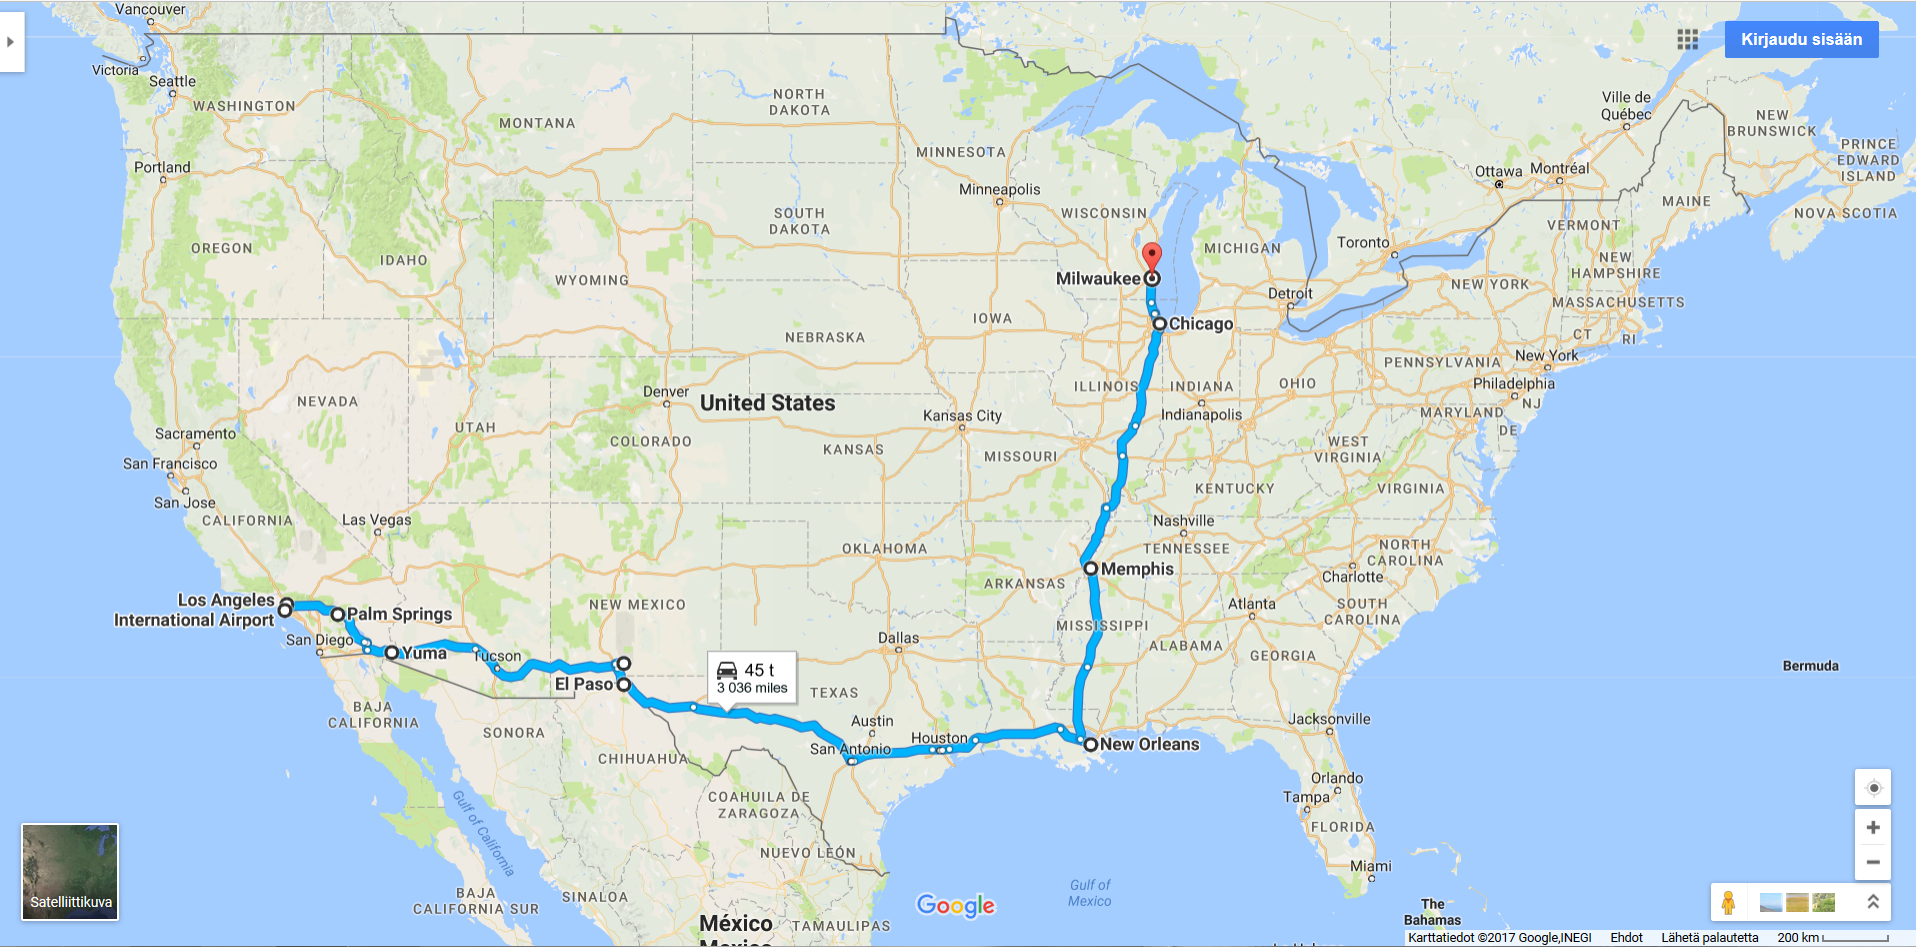 Lowrider-fi USA Road Trip 2017